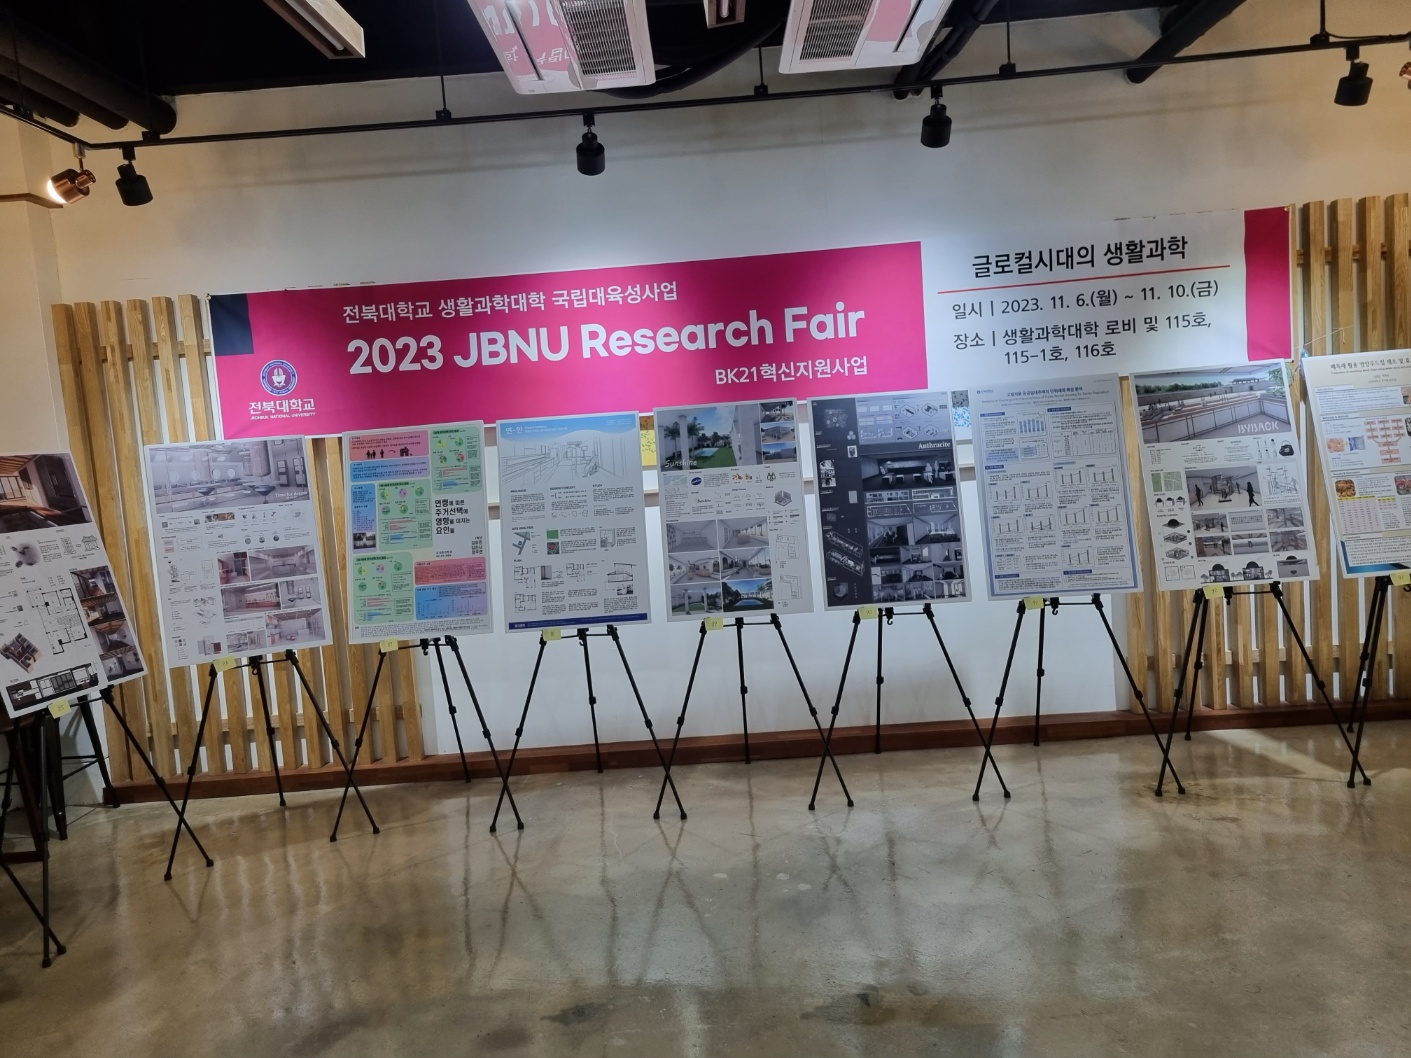 2023 JBNU Research Fair 행사장 4번째 첨부파일 이미지